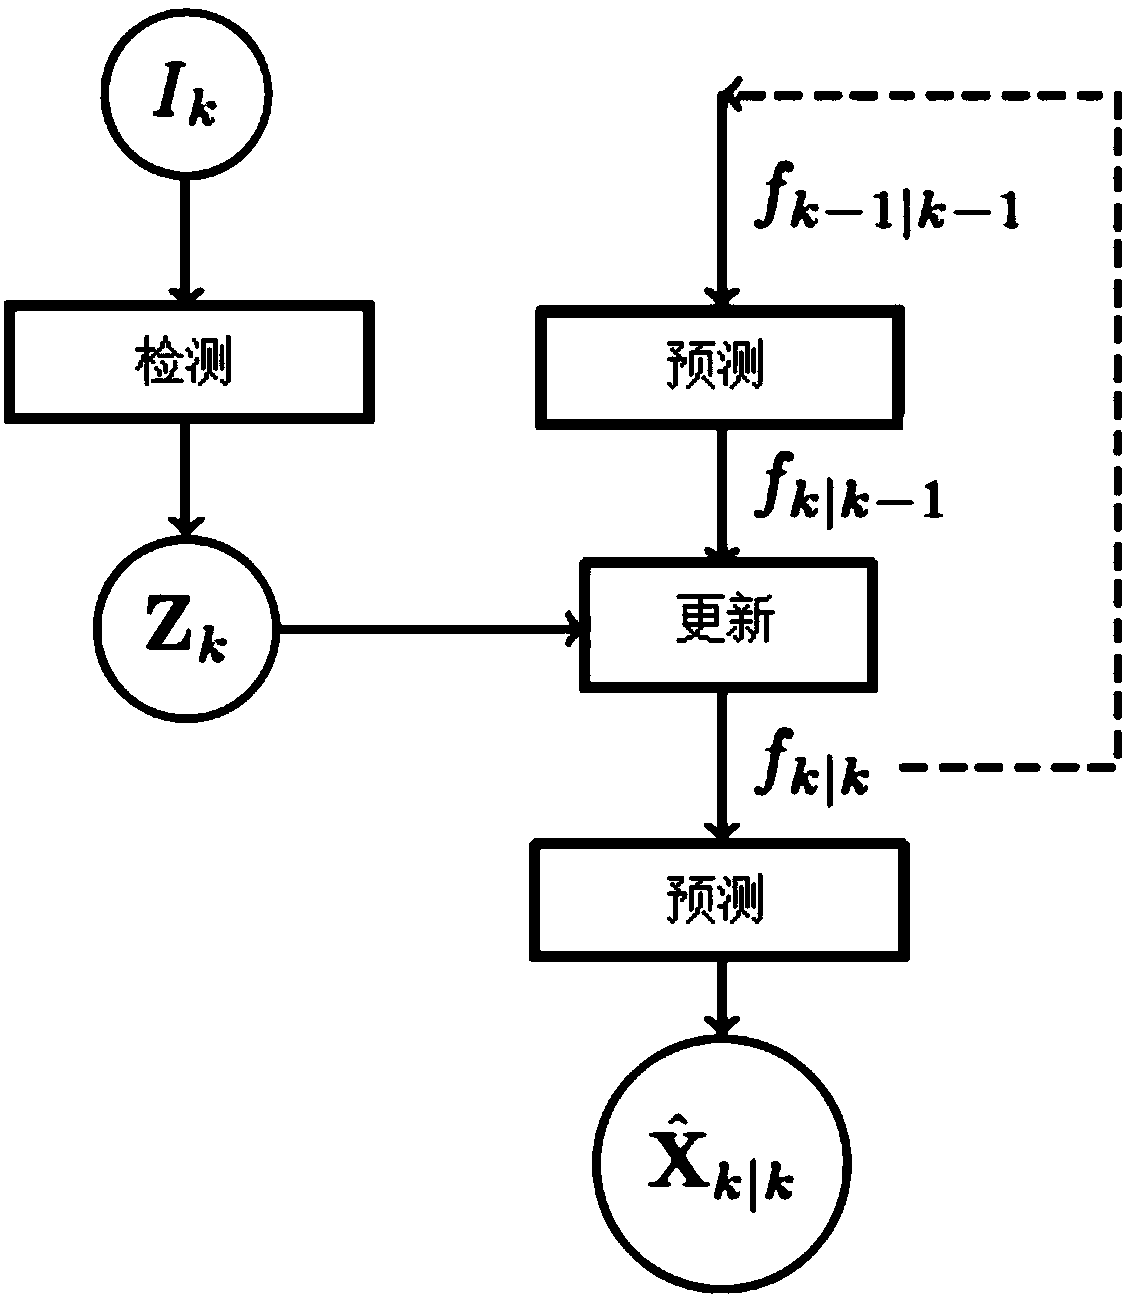 Three-dimensional multi-target tracking algorithm based on Poisson-multi-Bernoulli filtering